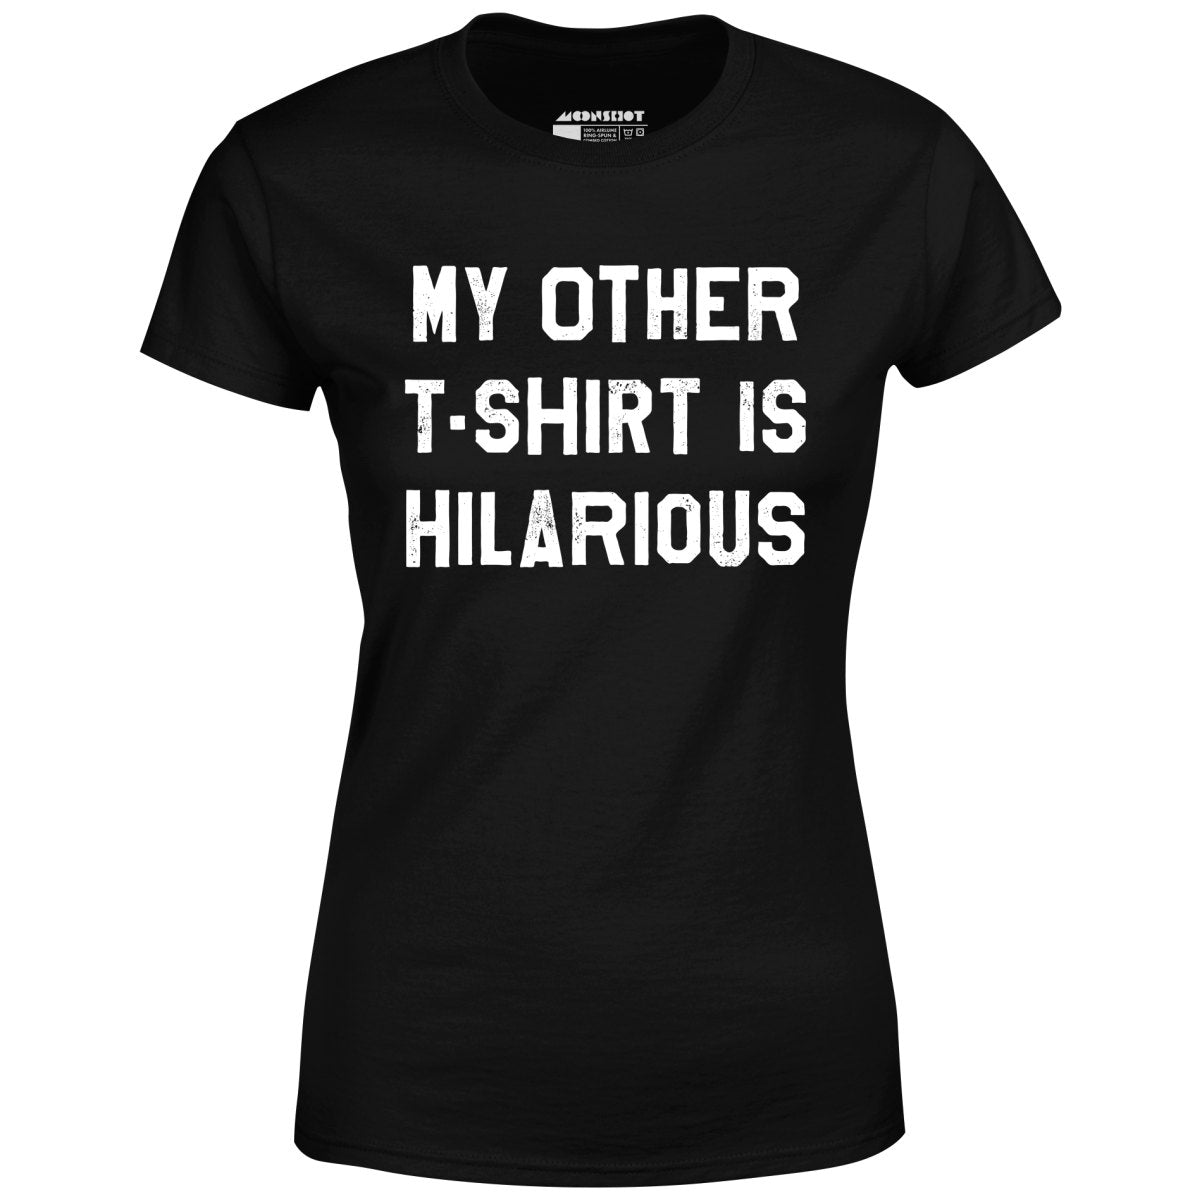 My Other T-Shirt is Hilarious - Women's T-Shirt